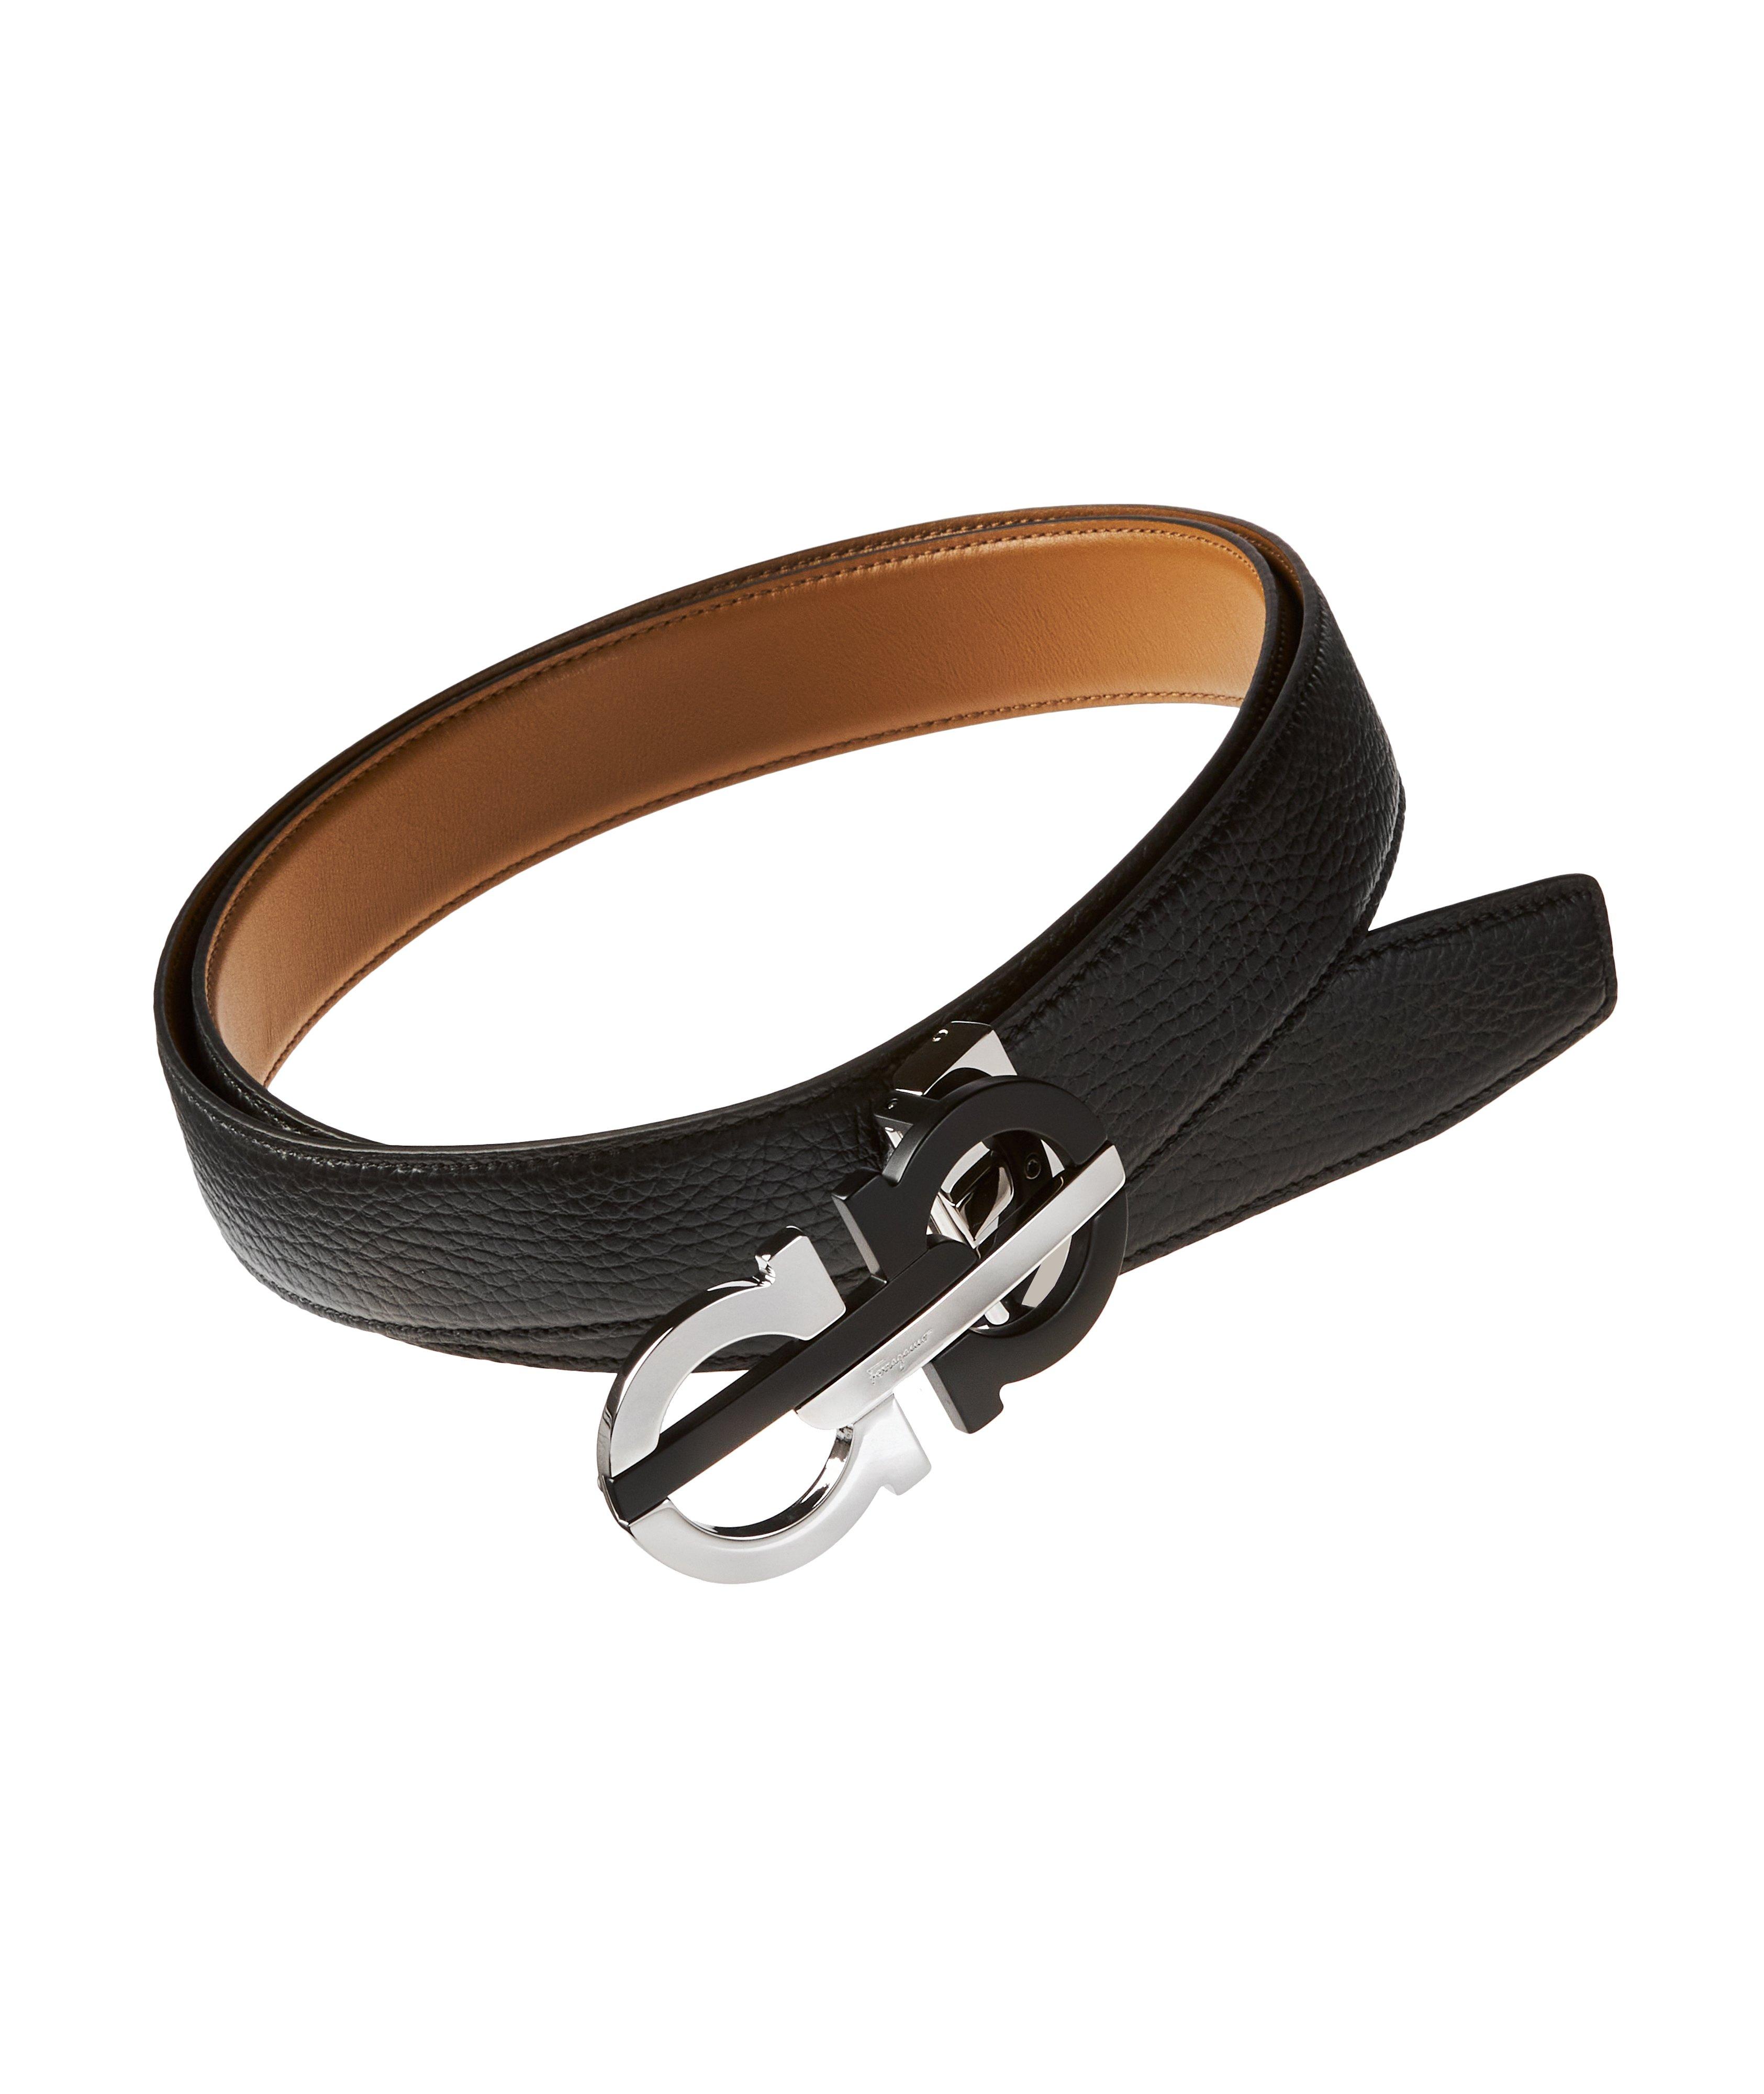 Reversible Two-Tone Double-Gancini Leather Belt image 0